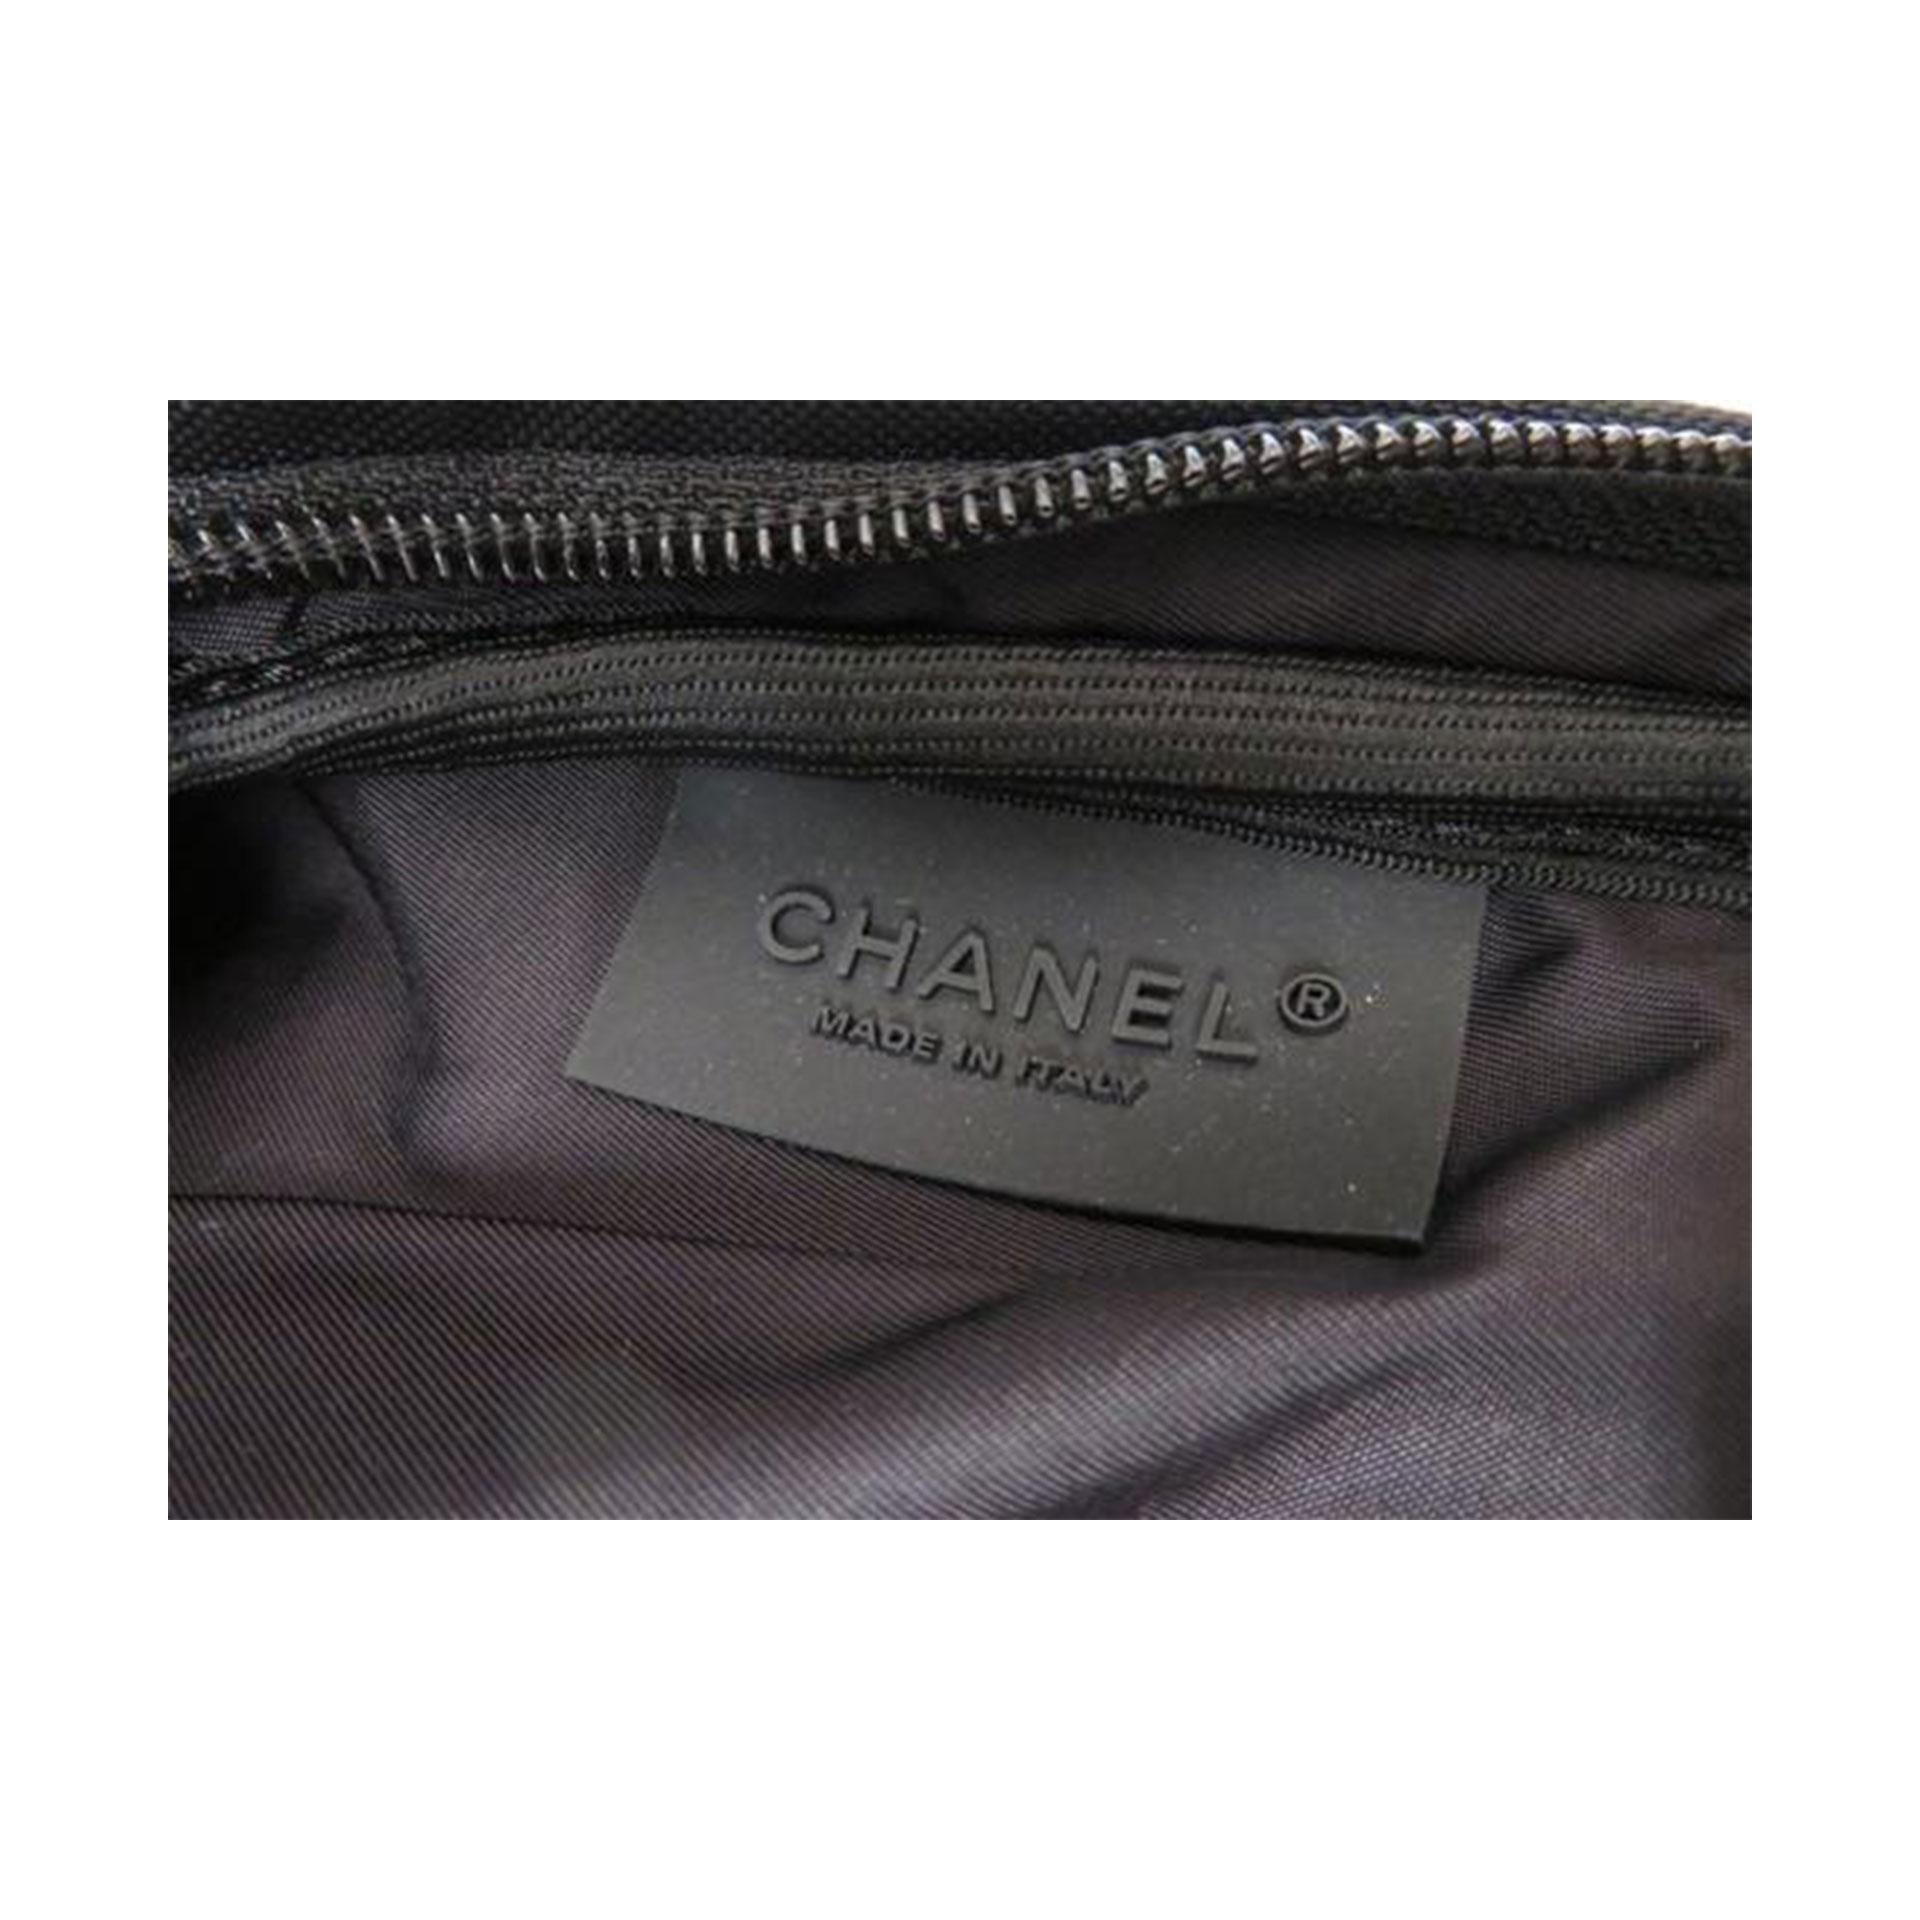 Chanel Canvas Tennis Racquet Cover White Nylon Sport Bag For Sale 1